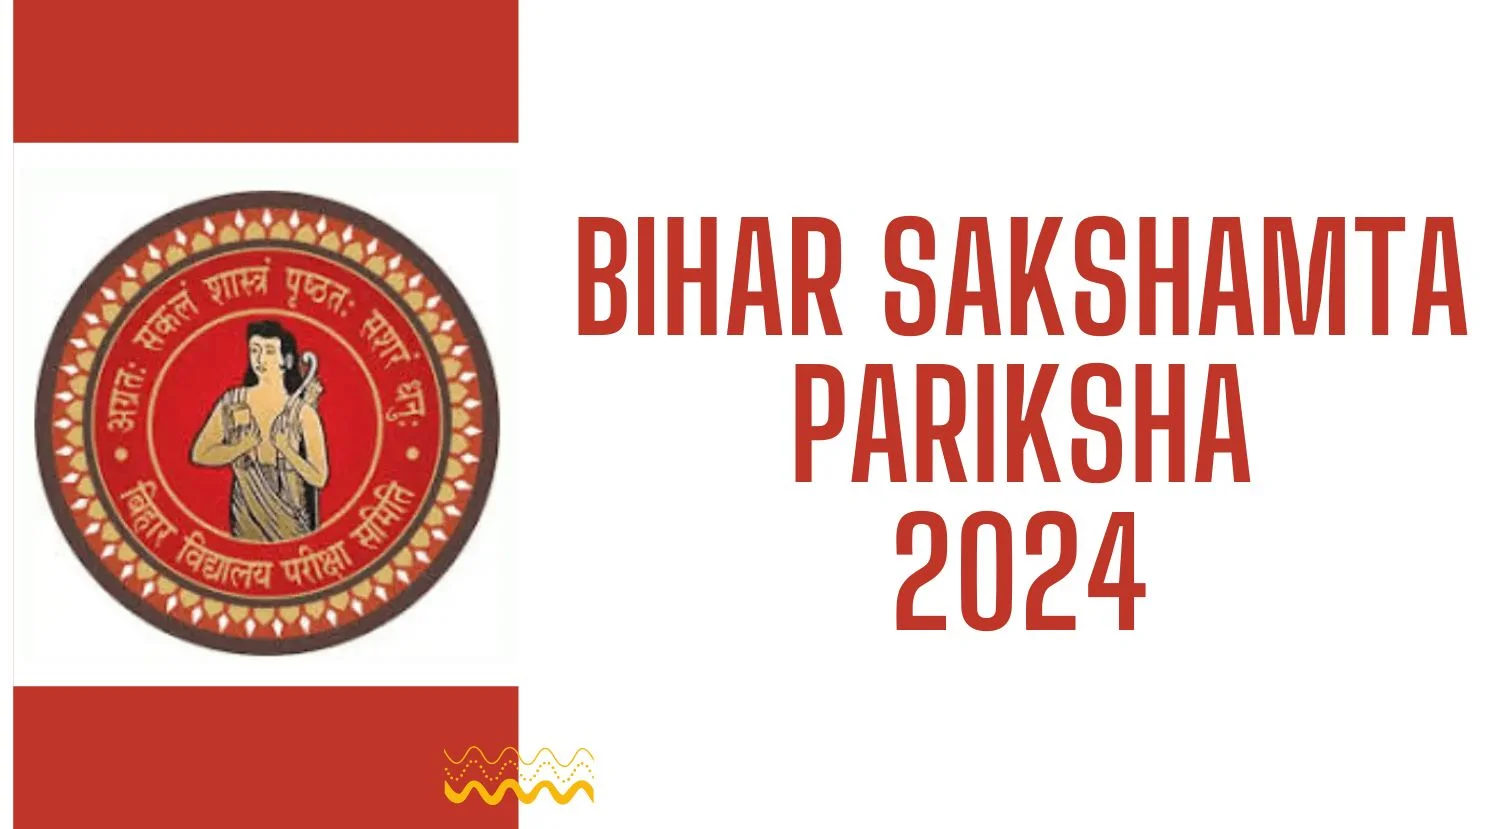 Bihar Sakshamta Pariksha Syllabus Exam Pattern 2024 - Check Out How to Download PDF Online